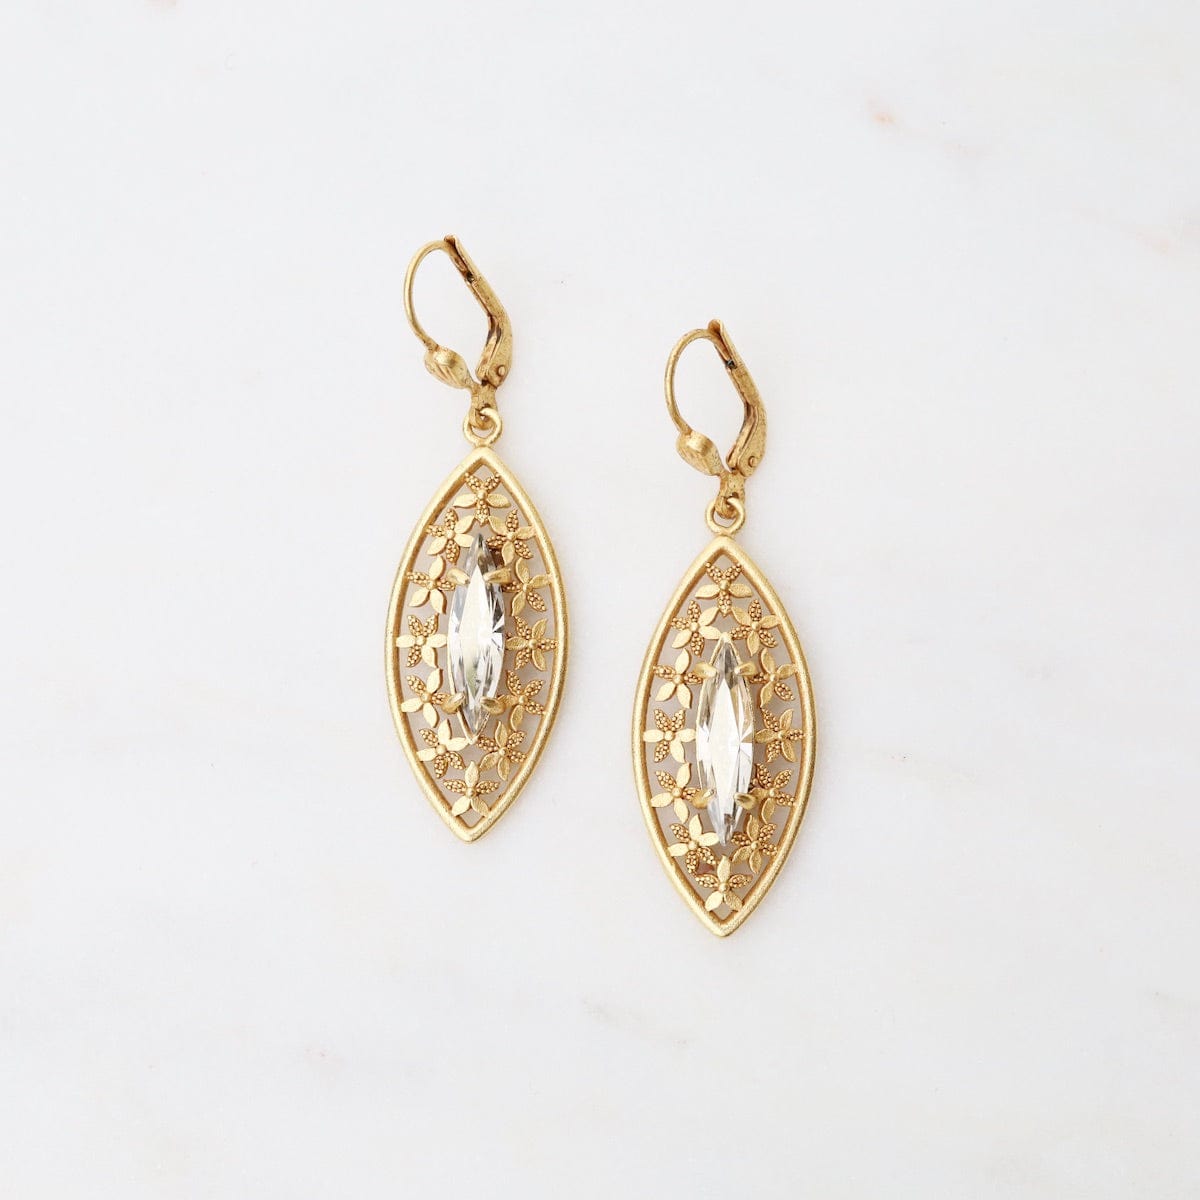 EAR-JM Marquise Clear Crystal Earrings - Gold Plate